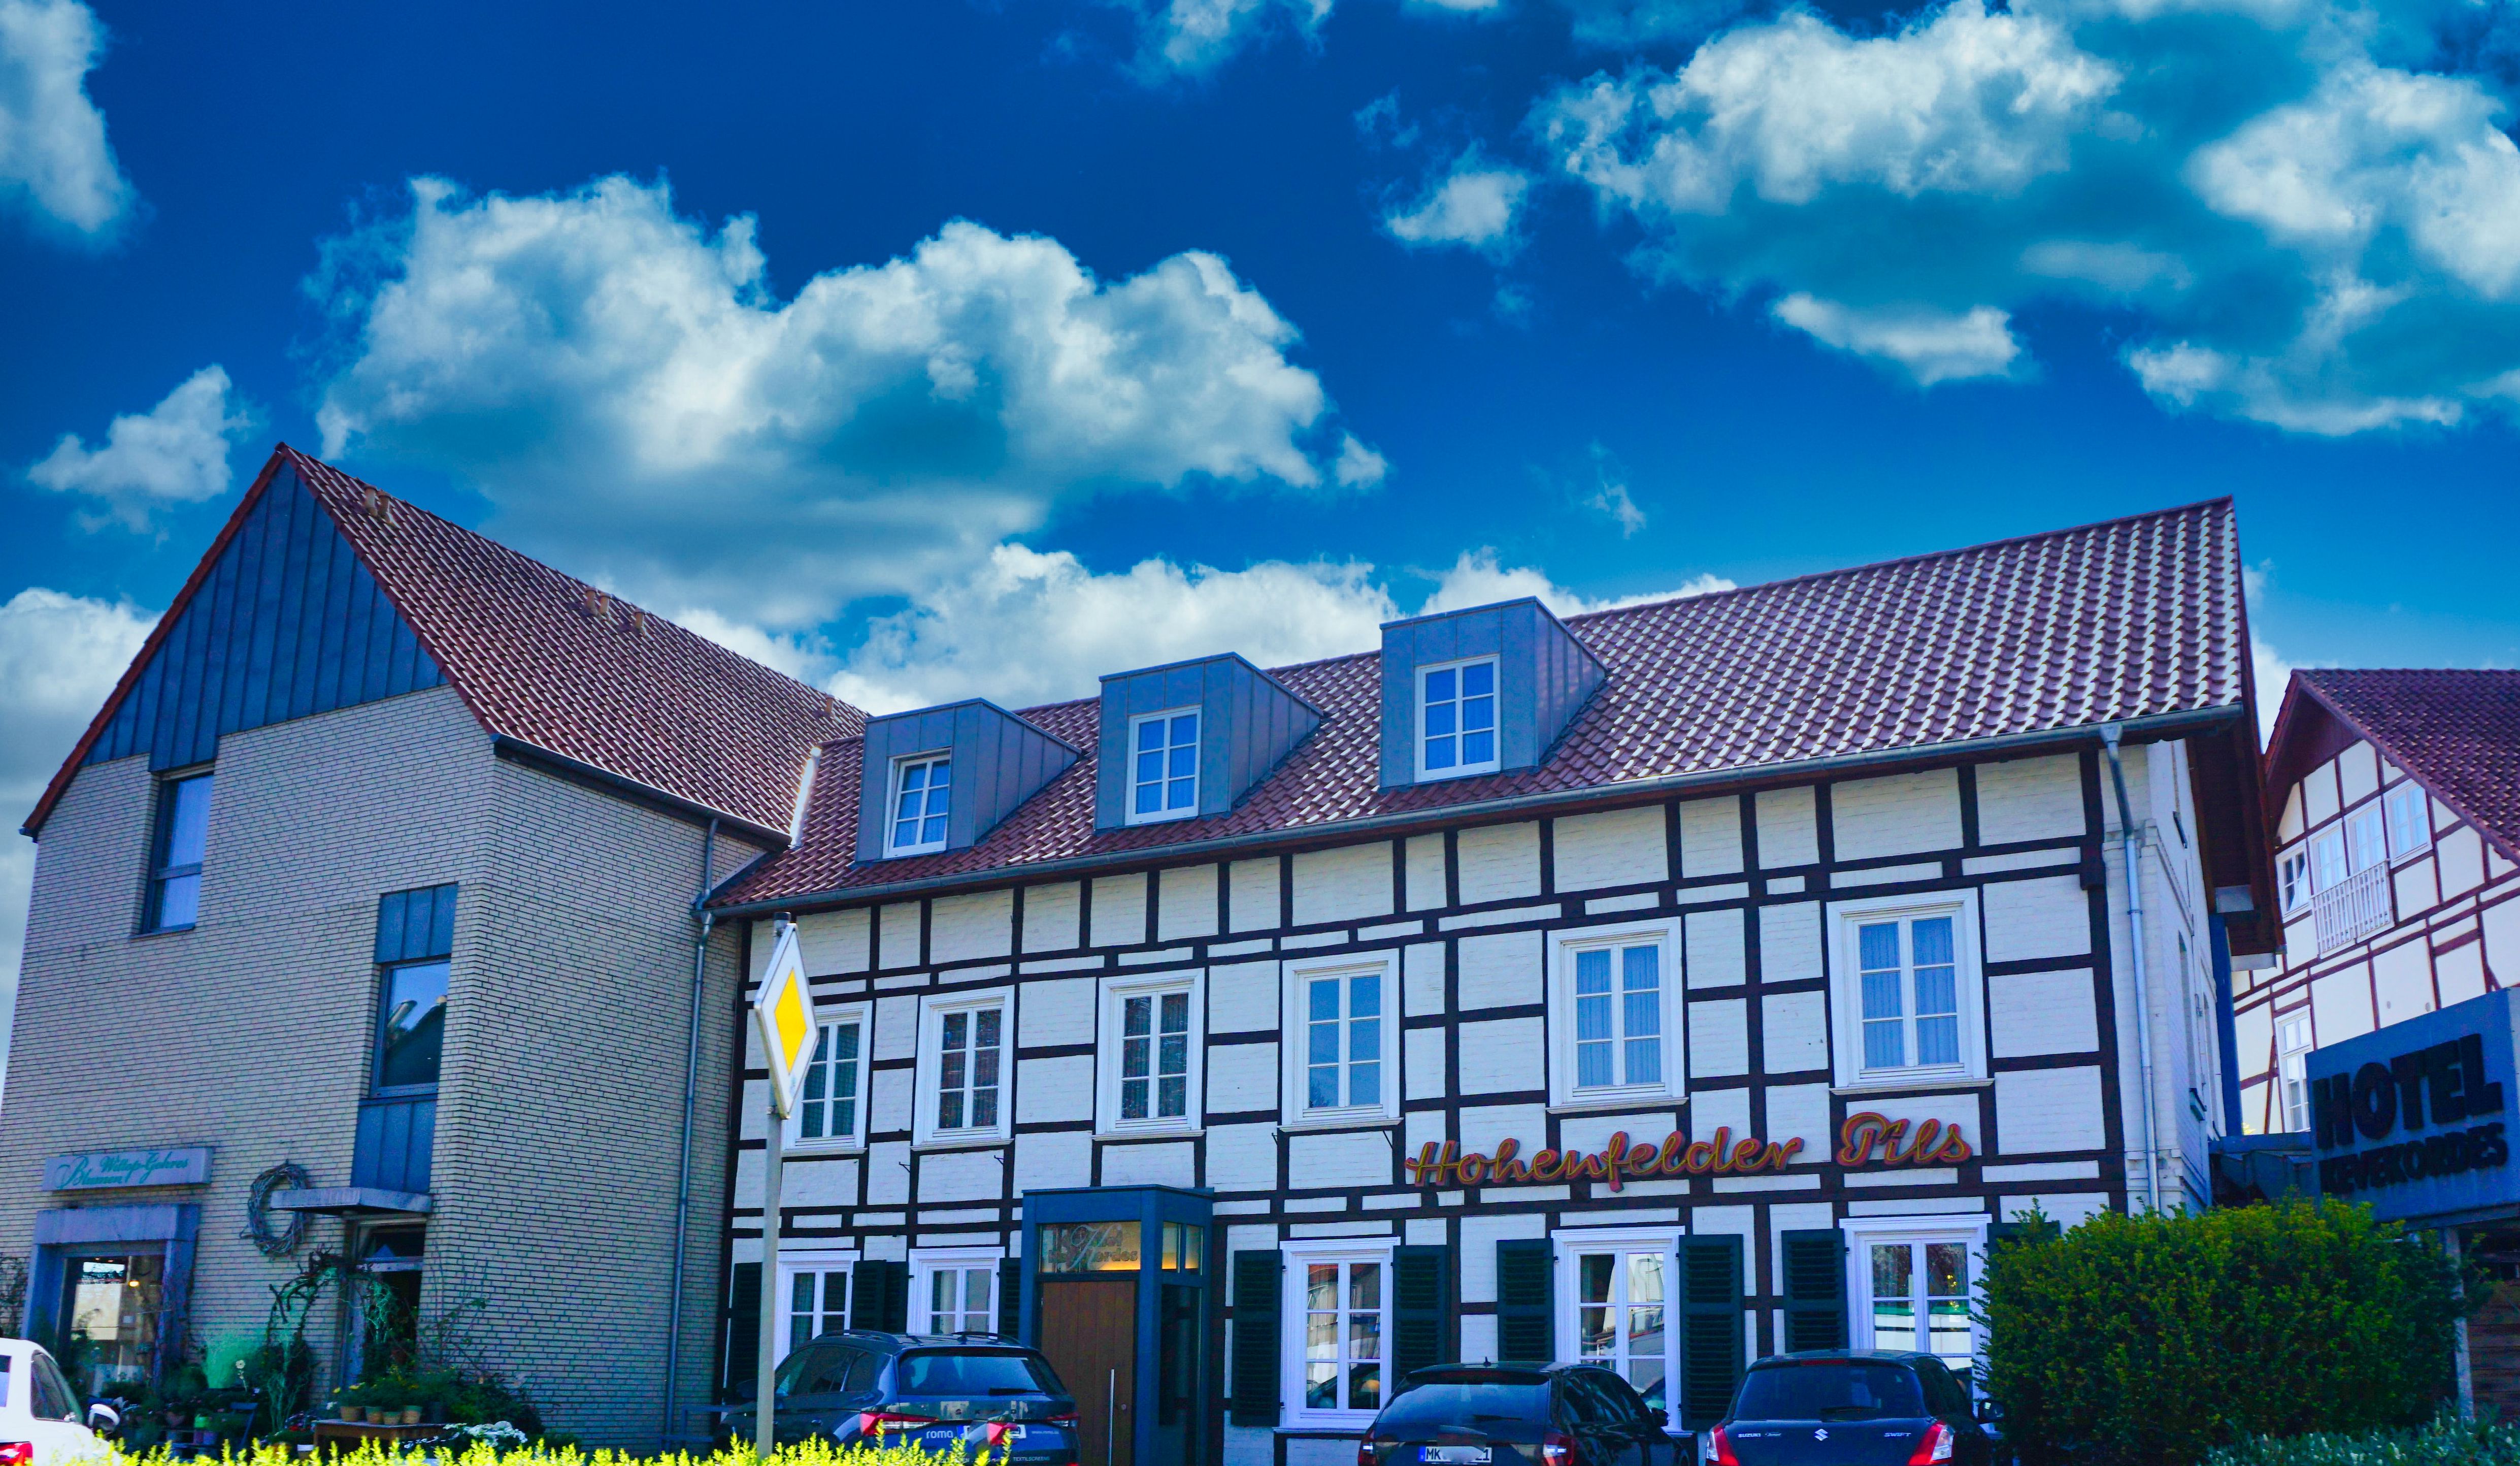 Hotel Kevekordes, Herzebrock-Clarholz.
